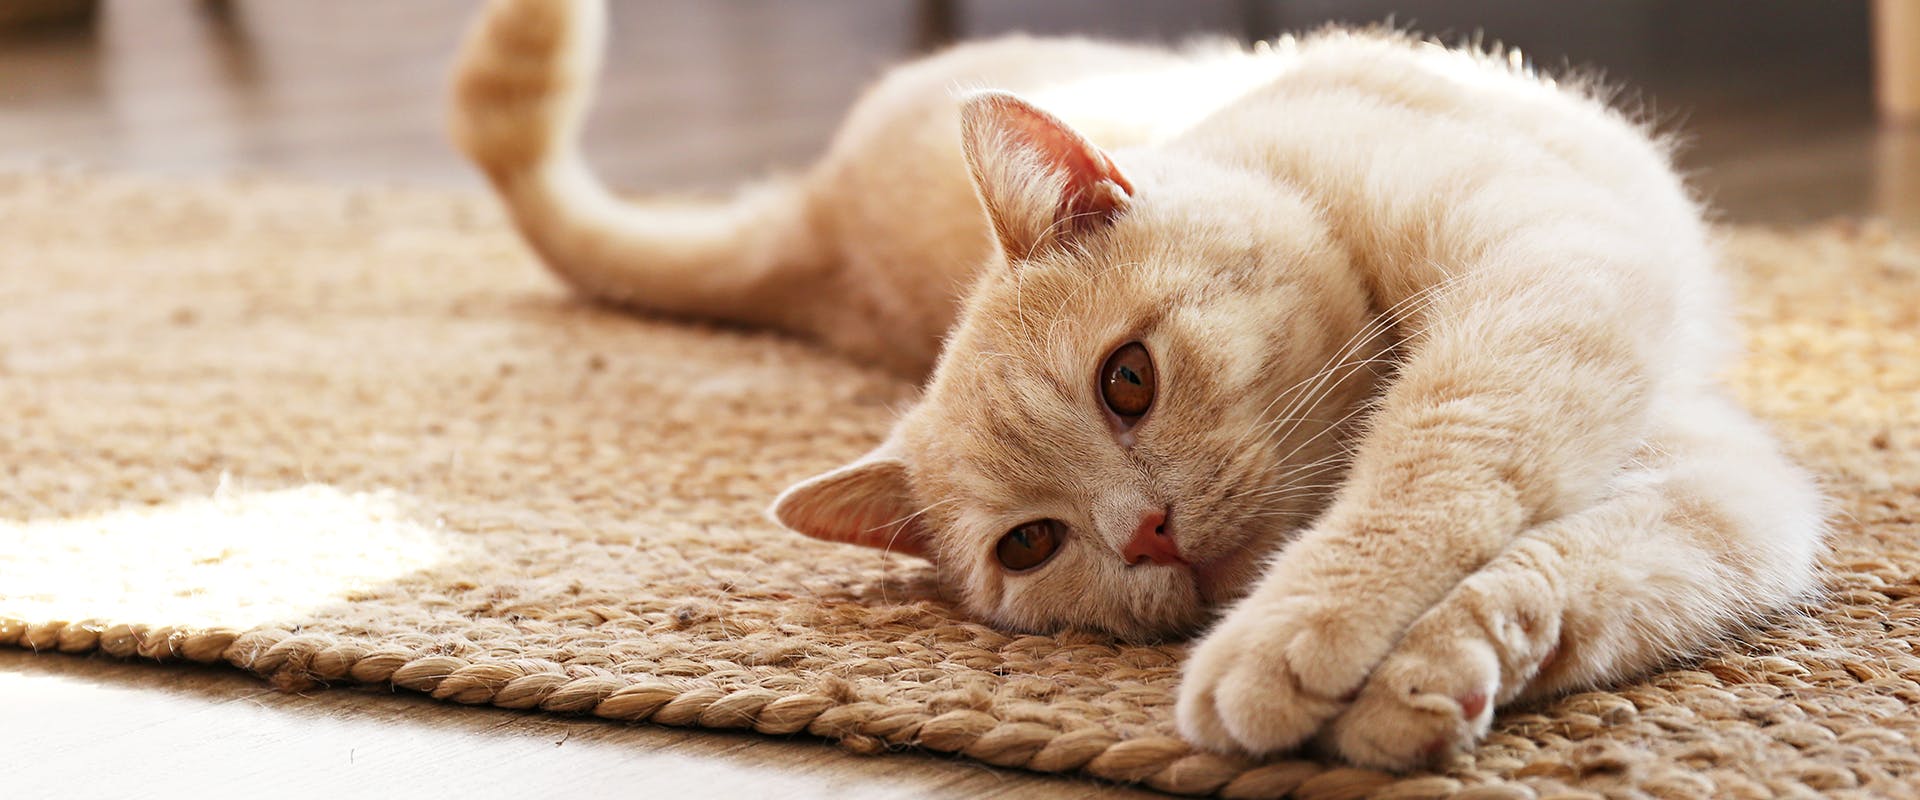 Popular cat names - a cat sprawled across a woven rug